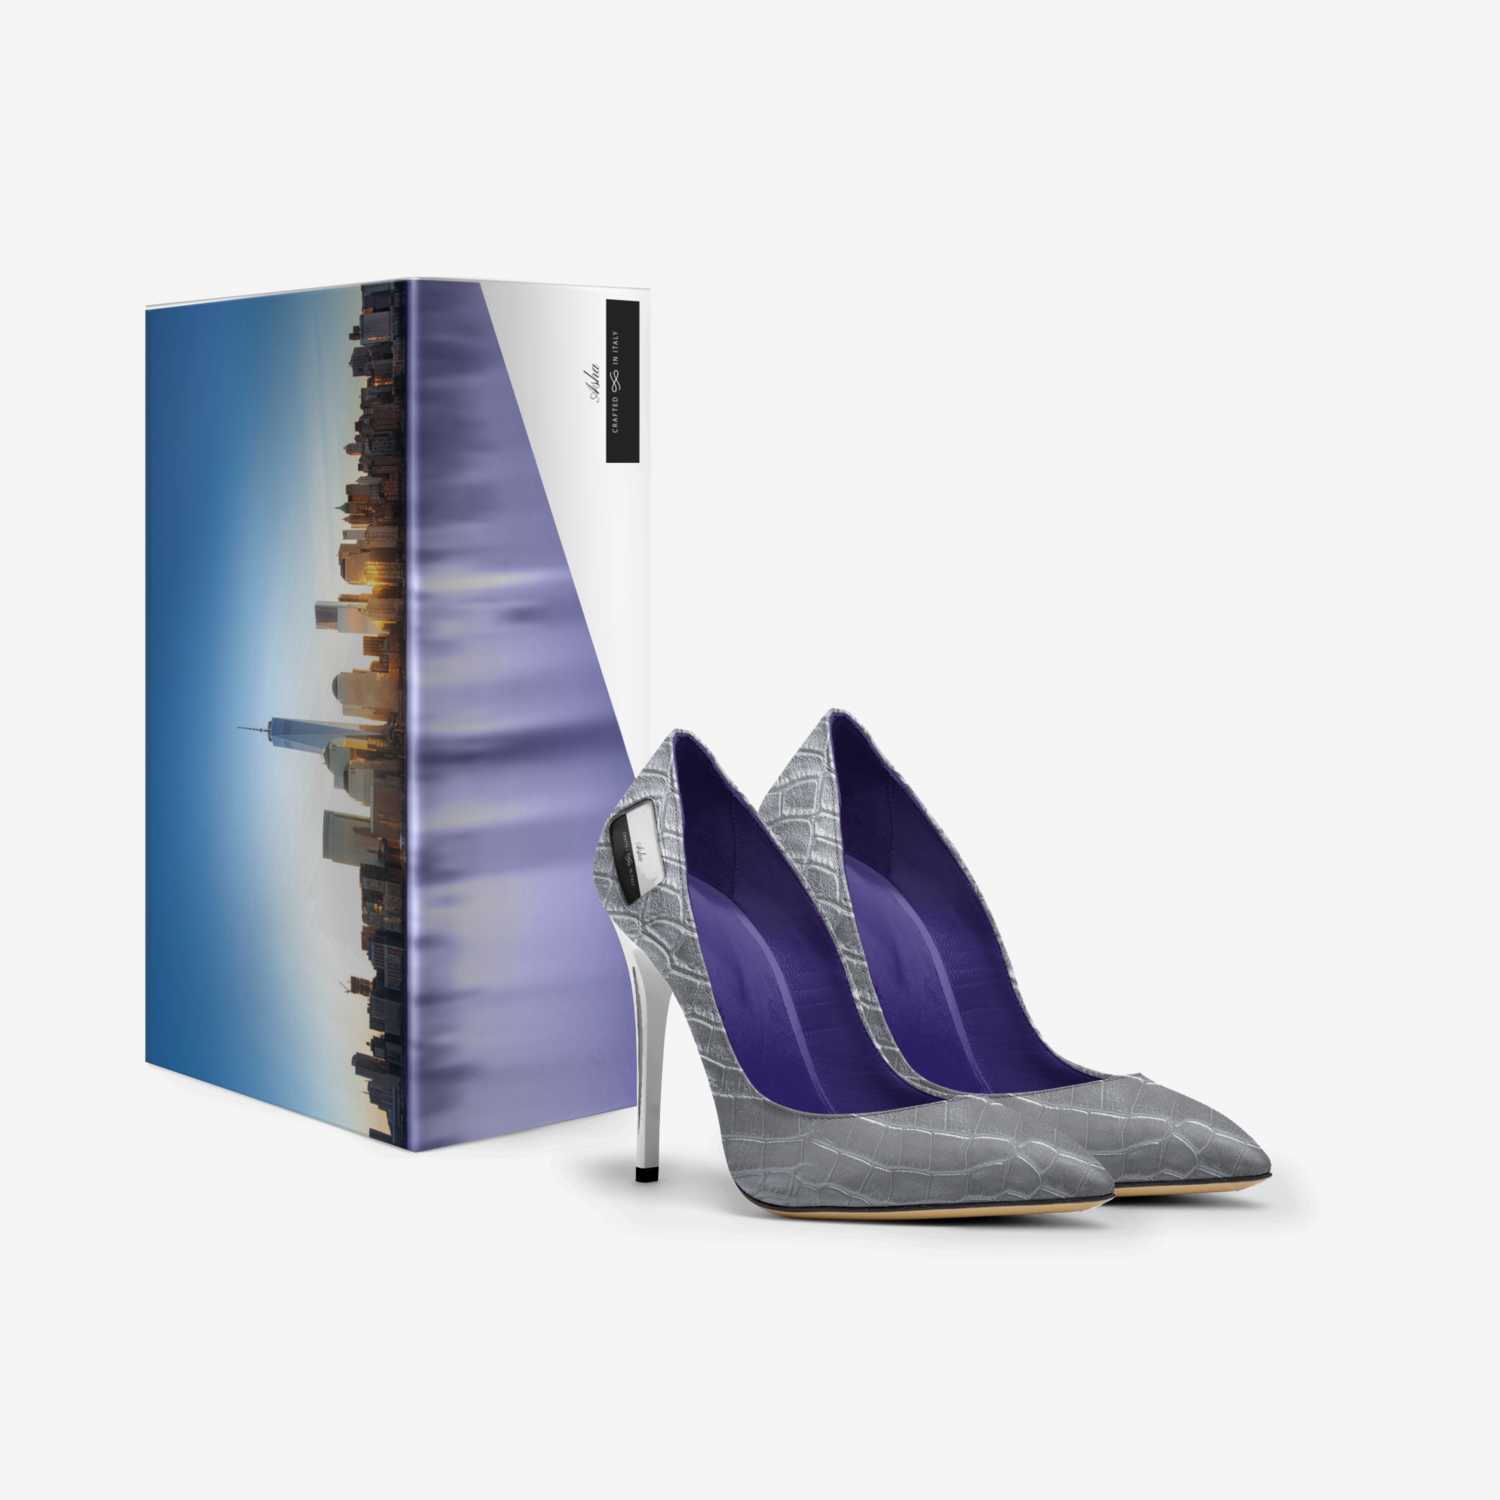 Asha  custom made in Italy shoes by Latasha Stephenson | Box view